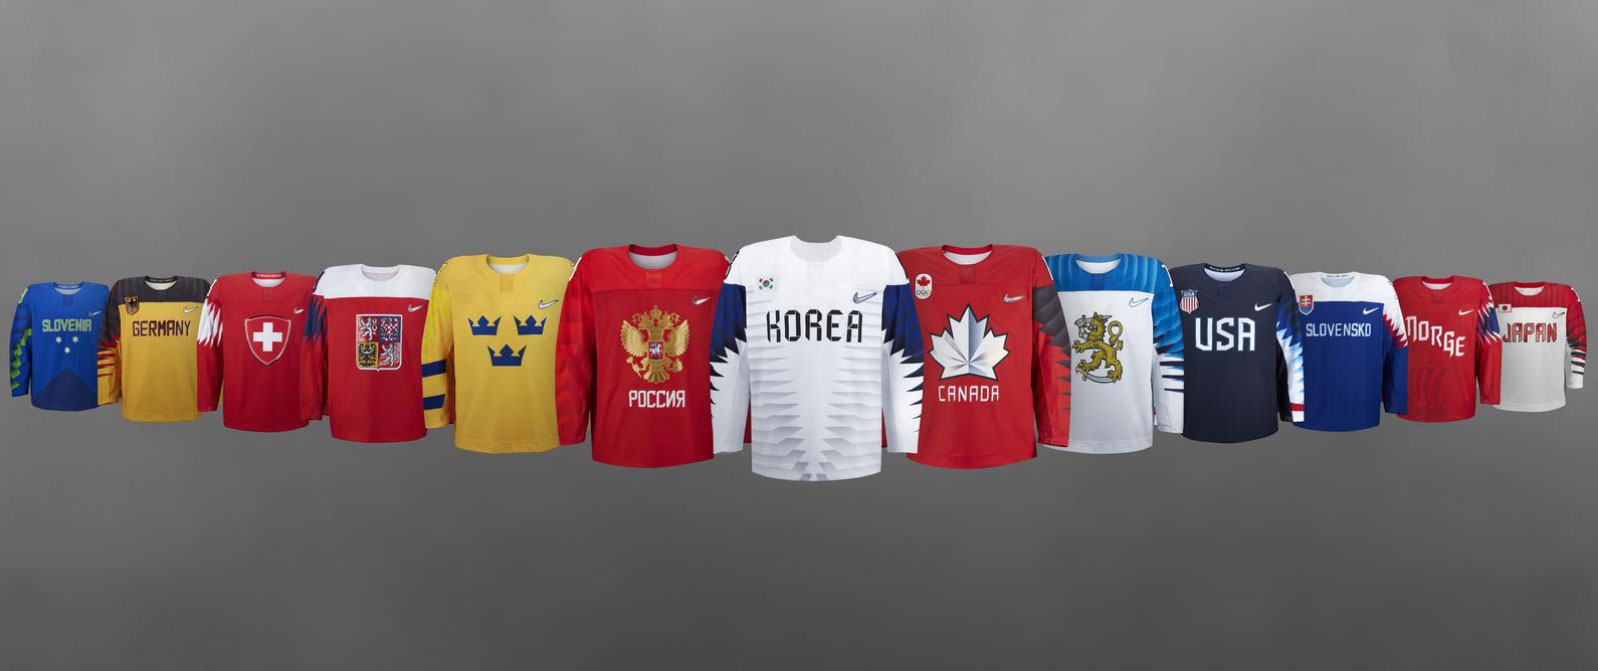 All-hockey-uniforms-Olympics-2018.jpg